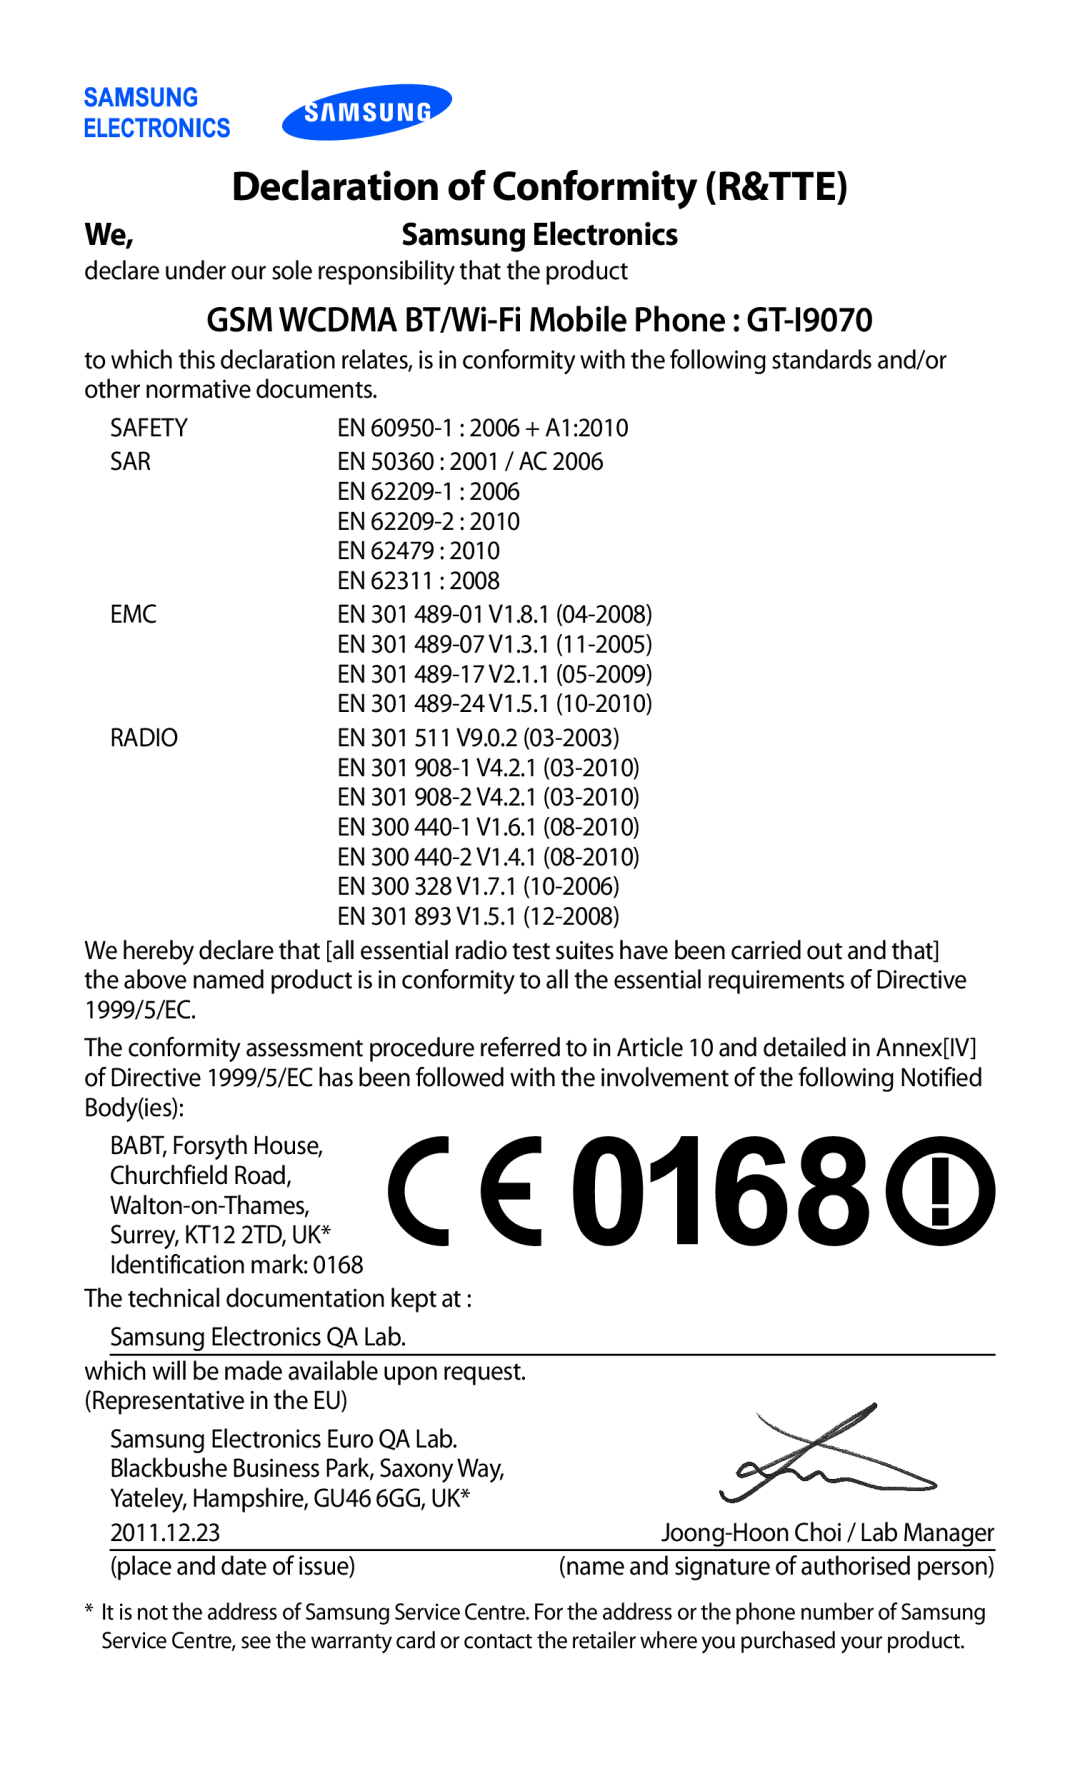 Samsung user manual Declaration of Conformity R&TTE, GSM WCDMA BT/Wi-Fi Mobile Phone GT-I9070 